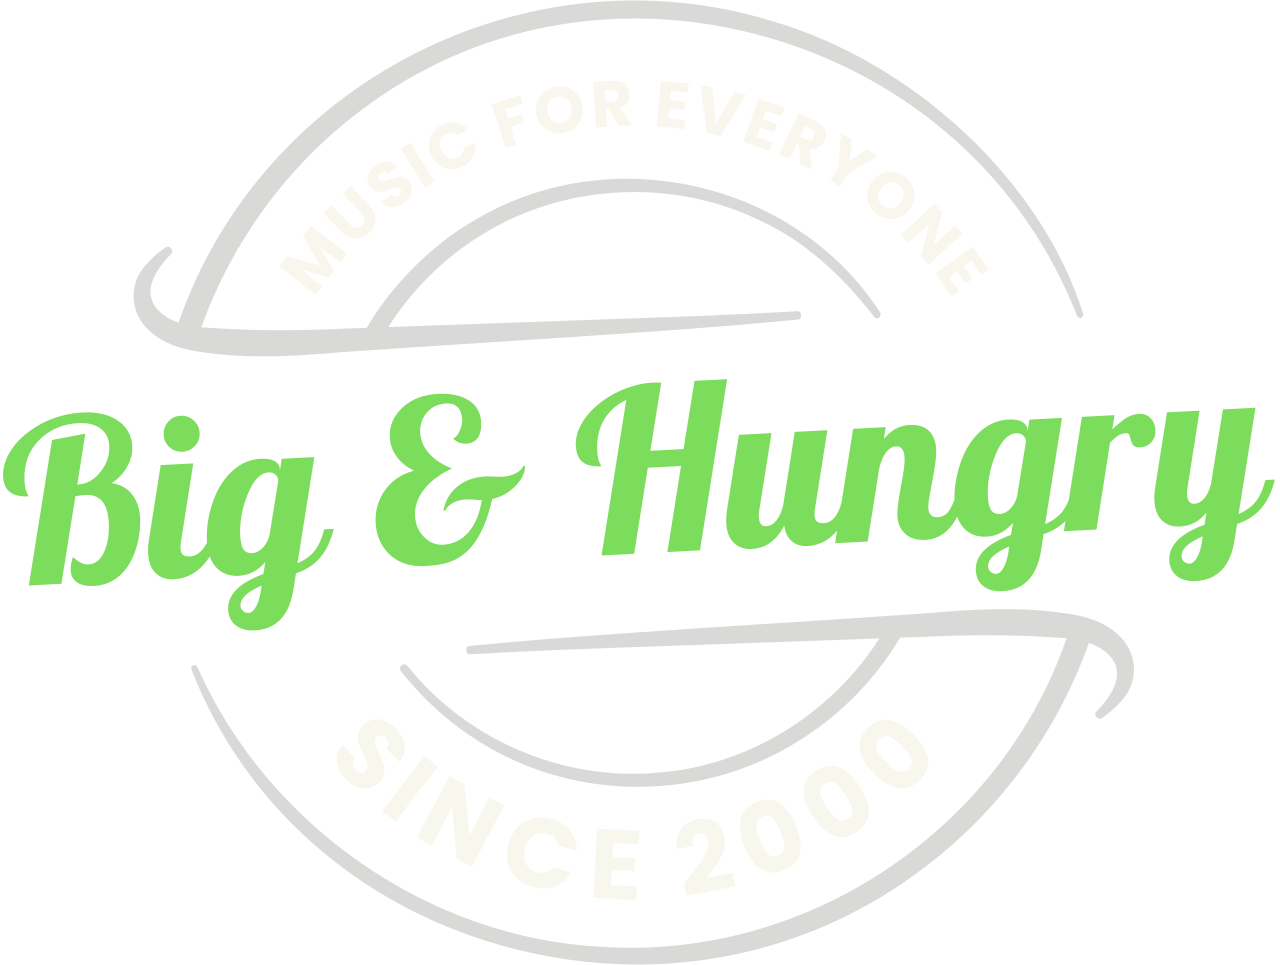 Big & Hungry's web page